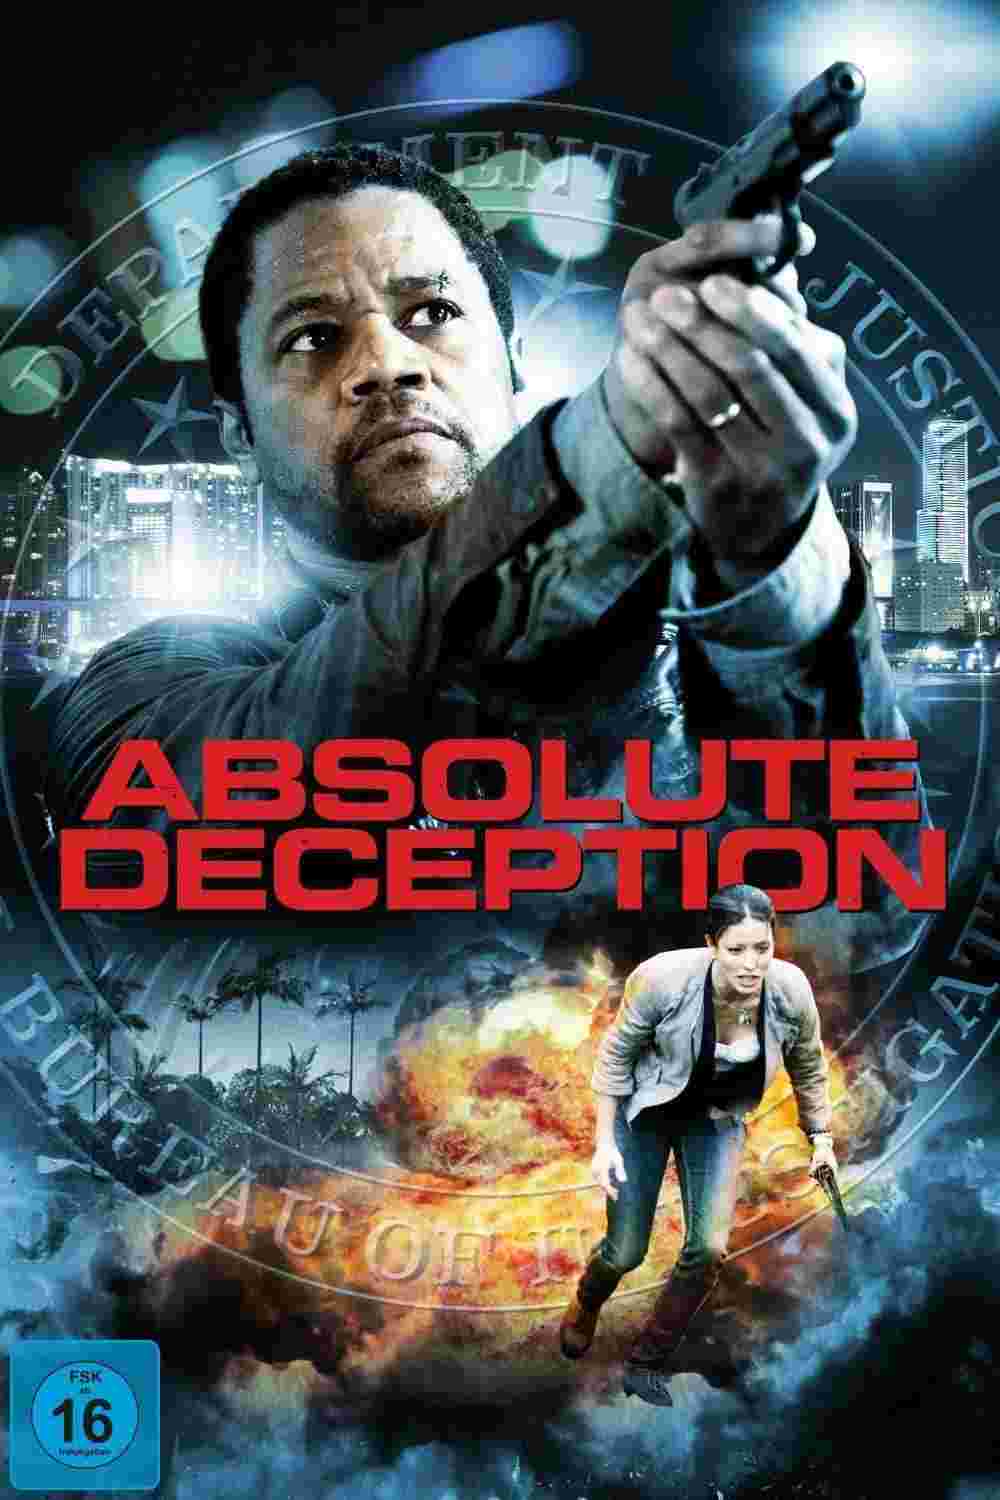 Absolute Deception (2013) Cuba Gooding Jr.